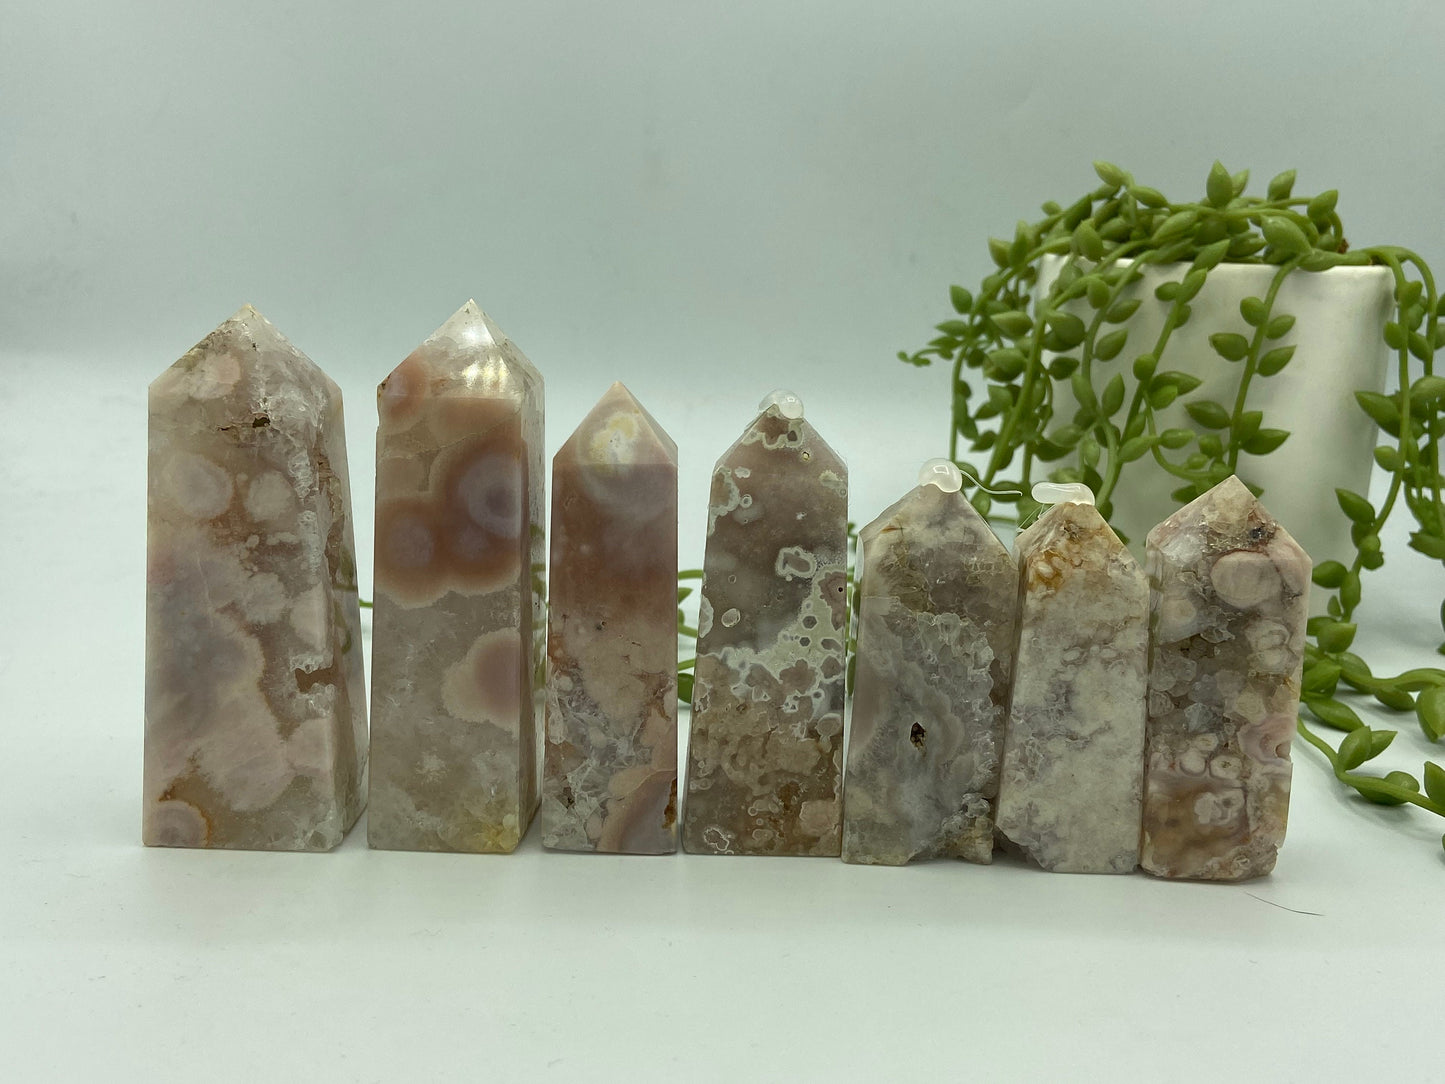 pink amethyst and flower agate crystal obelisk tower point gemstone healing, druzy pink amethyst, quartz, inclusions